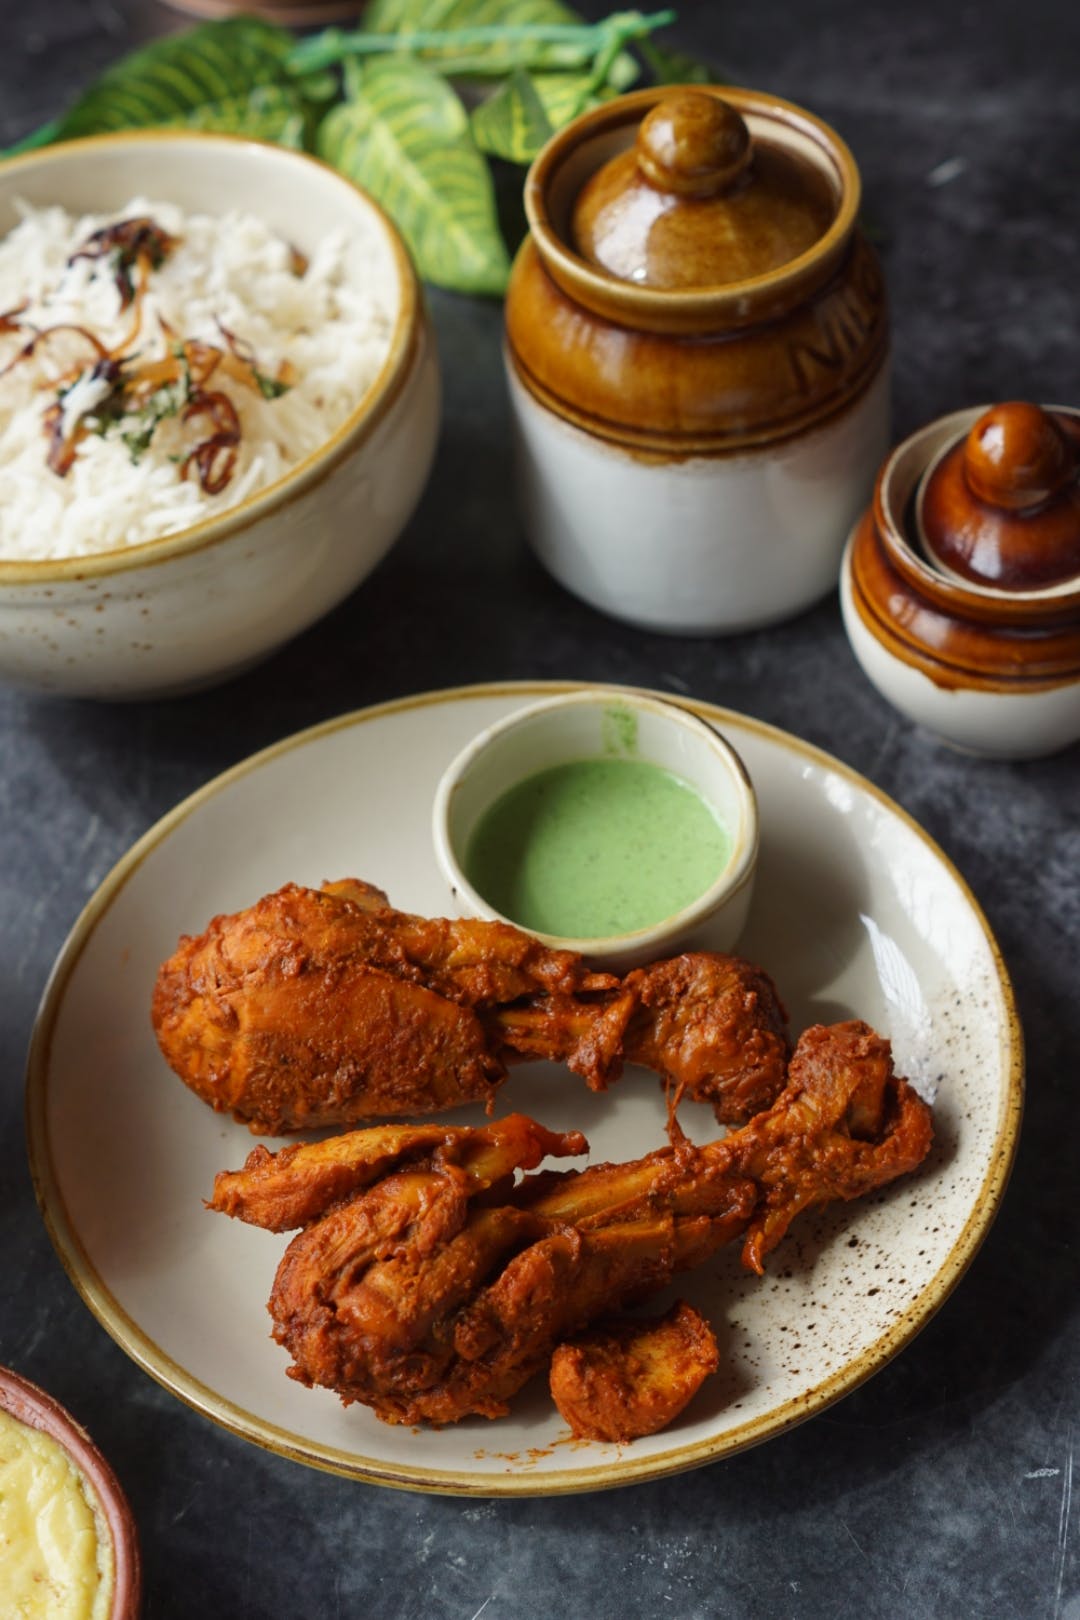 Sabir bhai : Authentic Muslim Cuisine Available At Your Door Step!